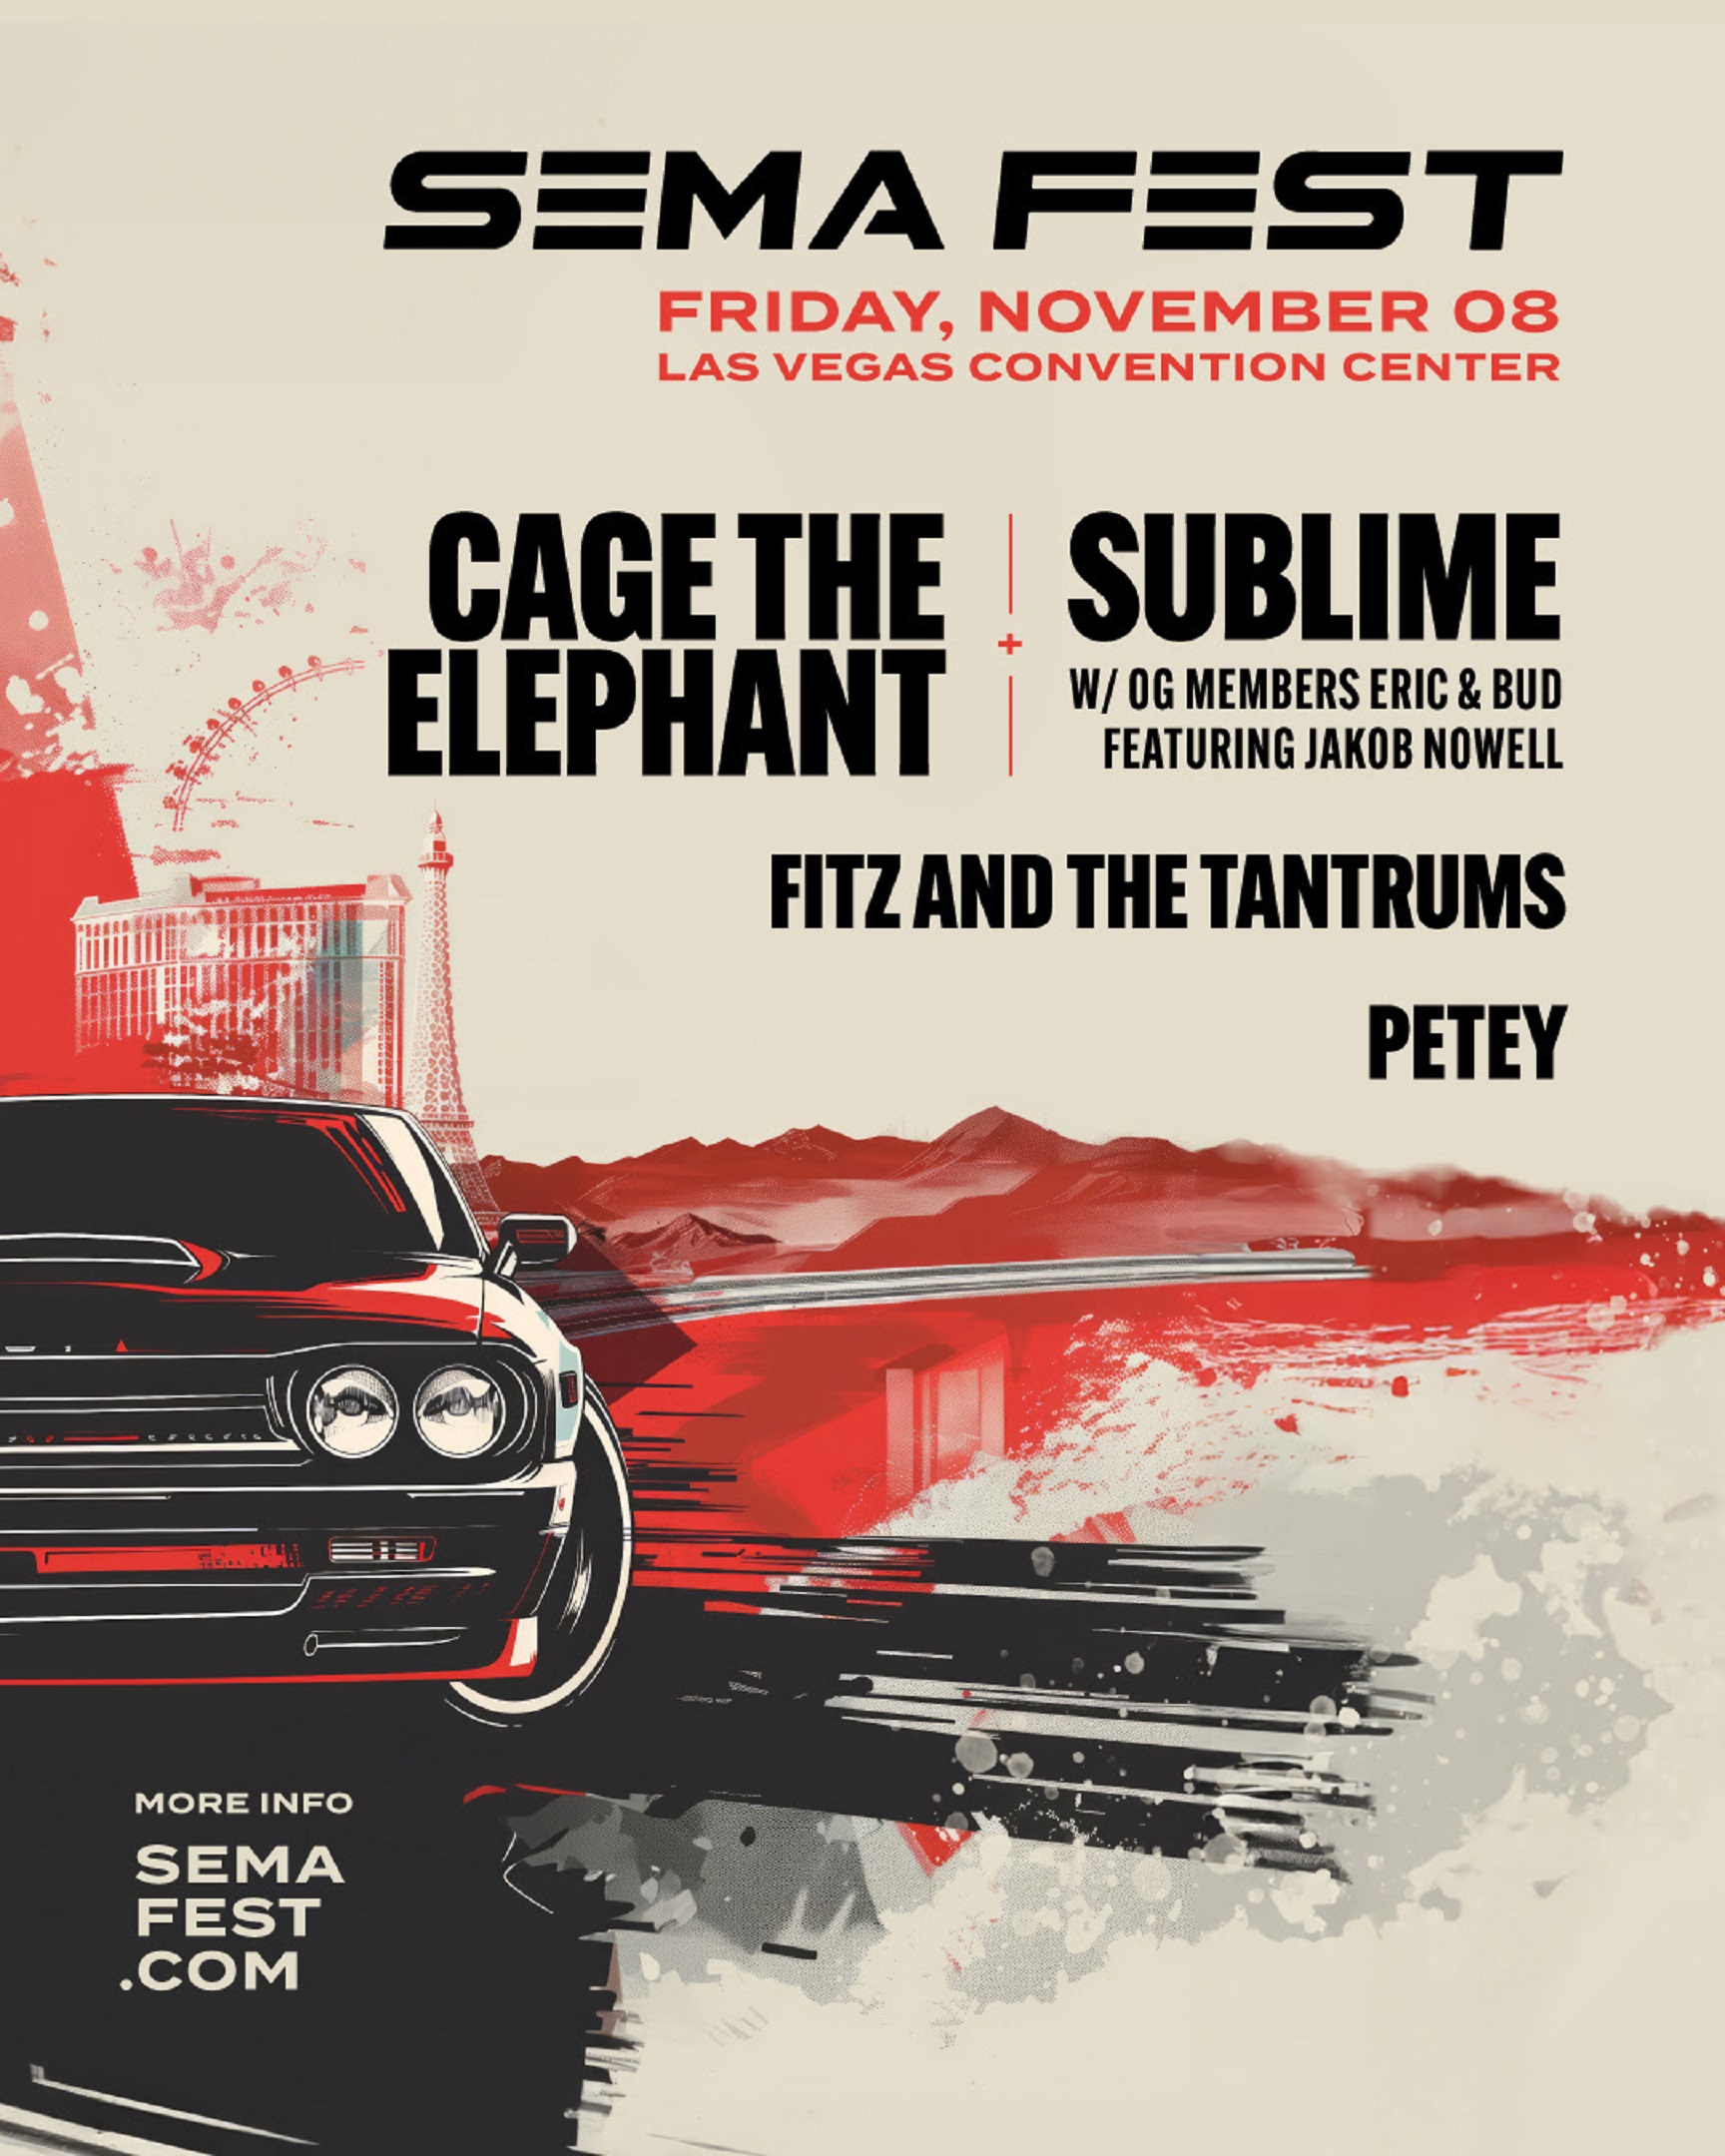 SEMA Fest Returns To Las Vegas Friday, November 8